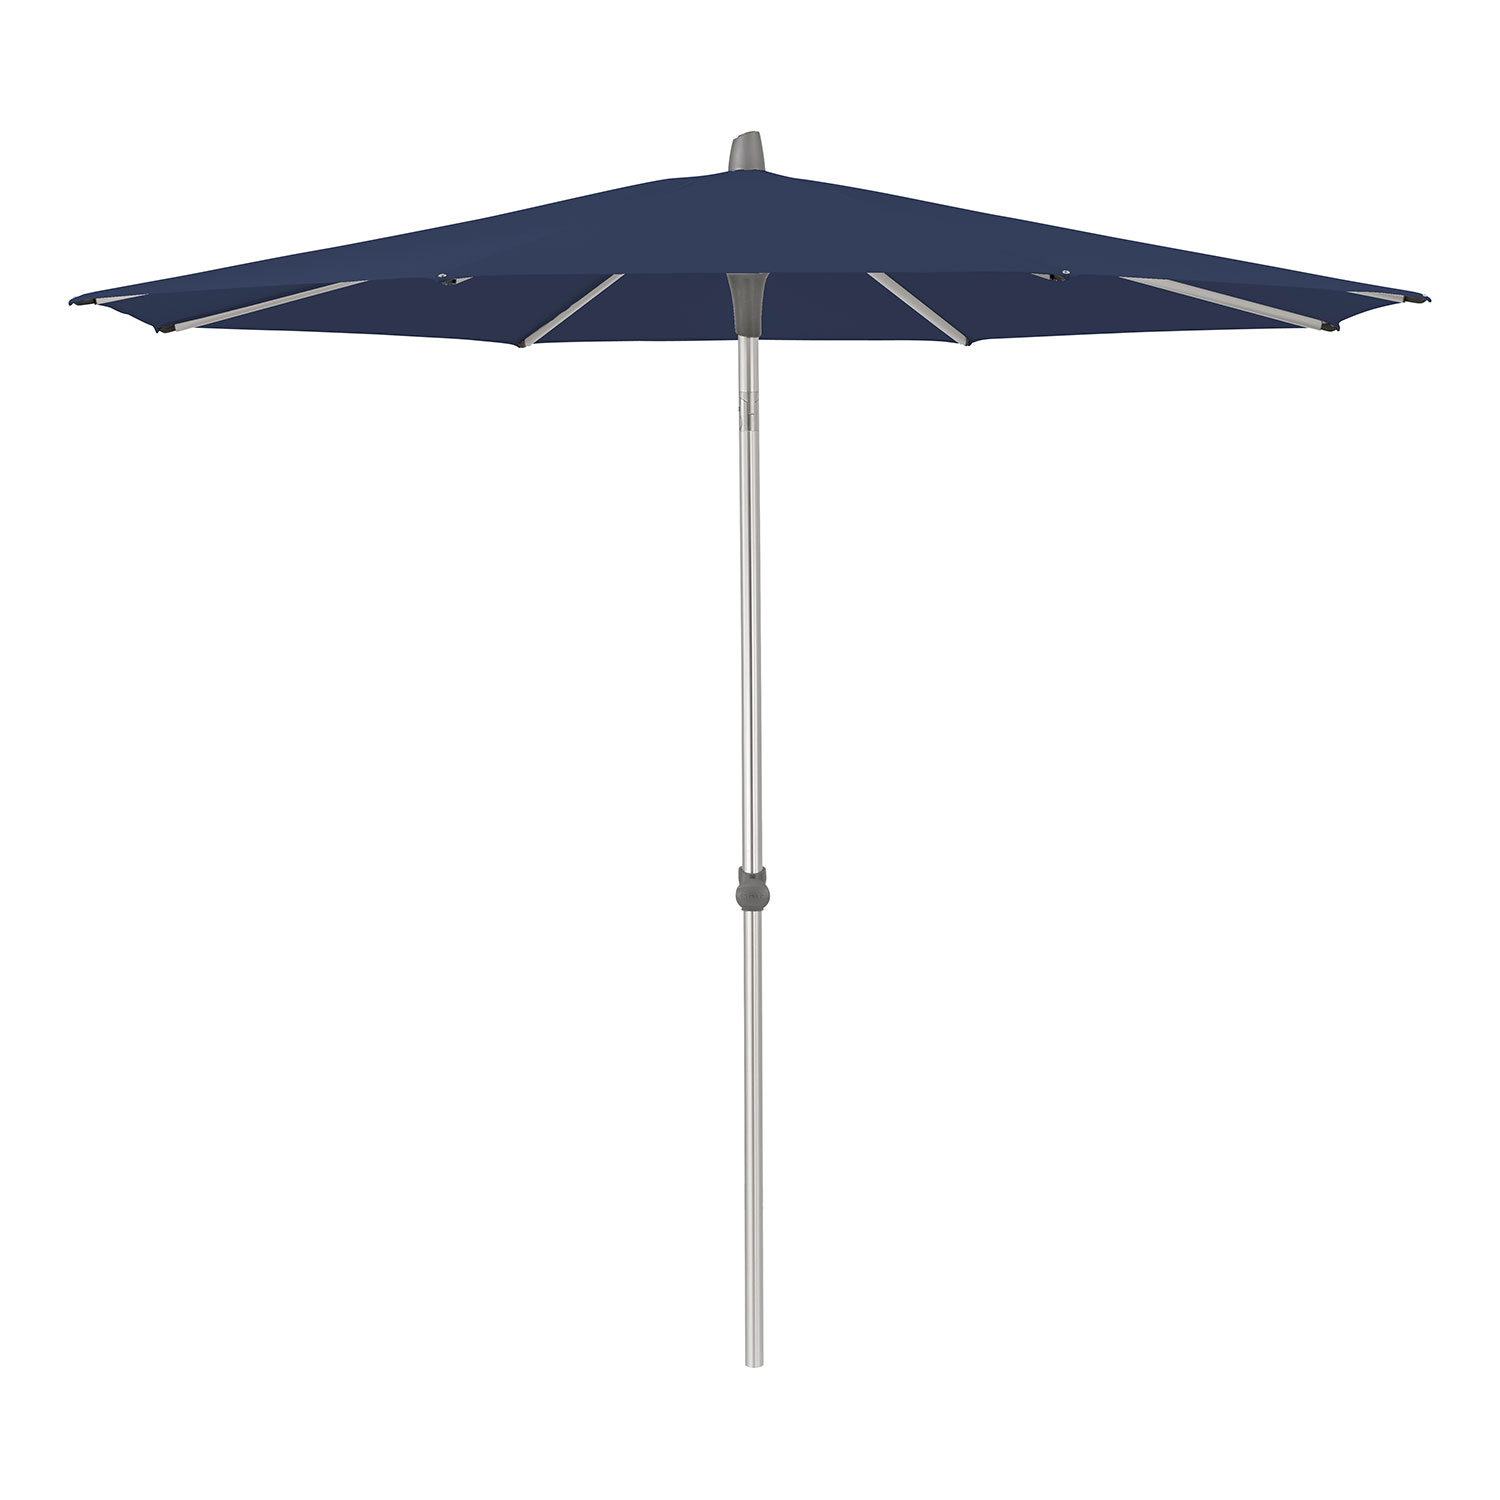 Glatz Alu-smart parasoll 250 cm kat.5 530 atlantic